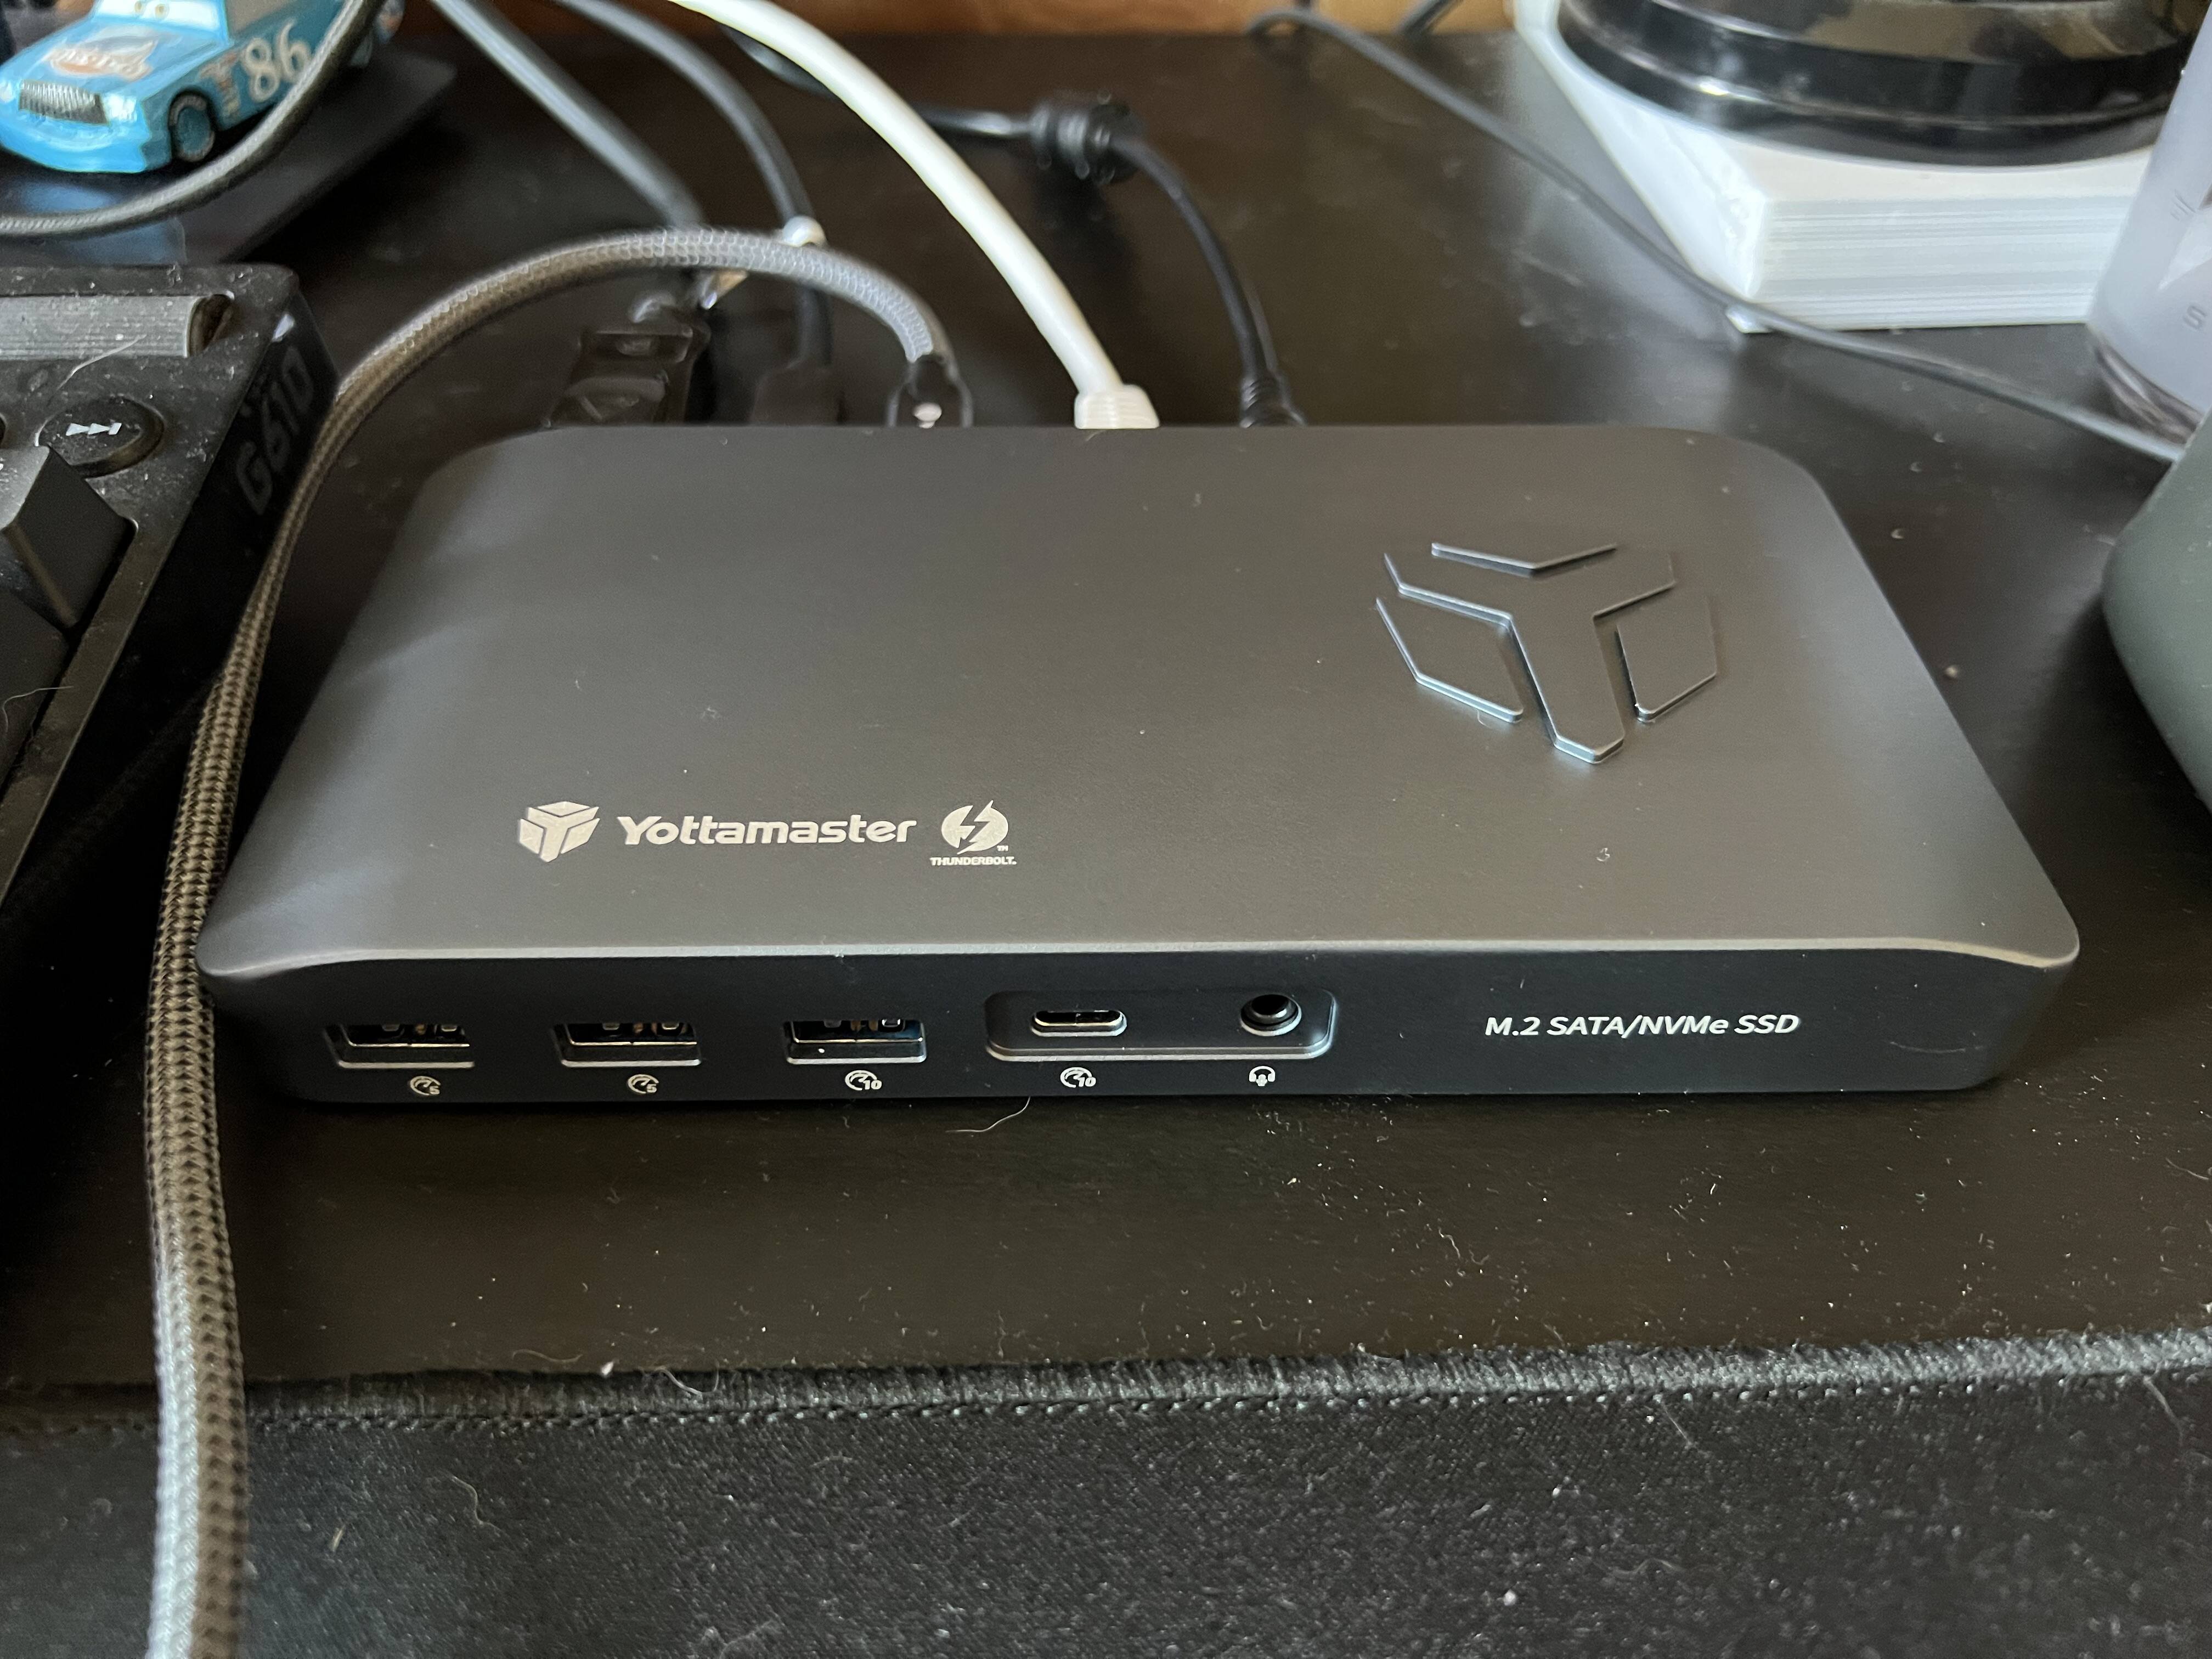 Yottamaster MS5-T3 Thunderbolt 3 Dock - Member Reviews - Linus 